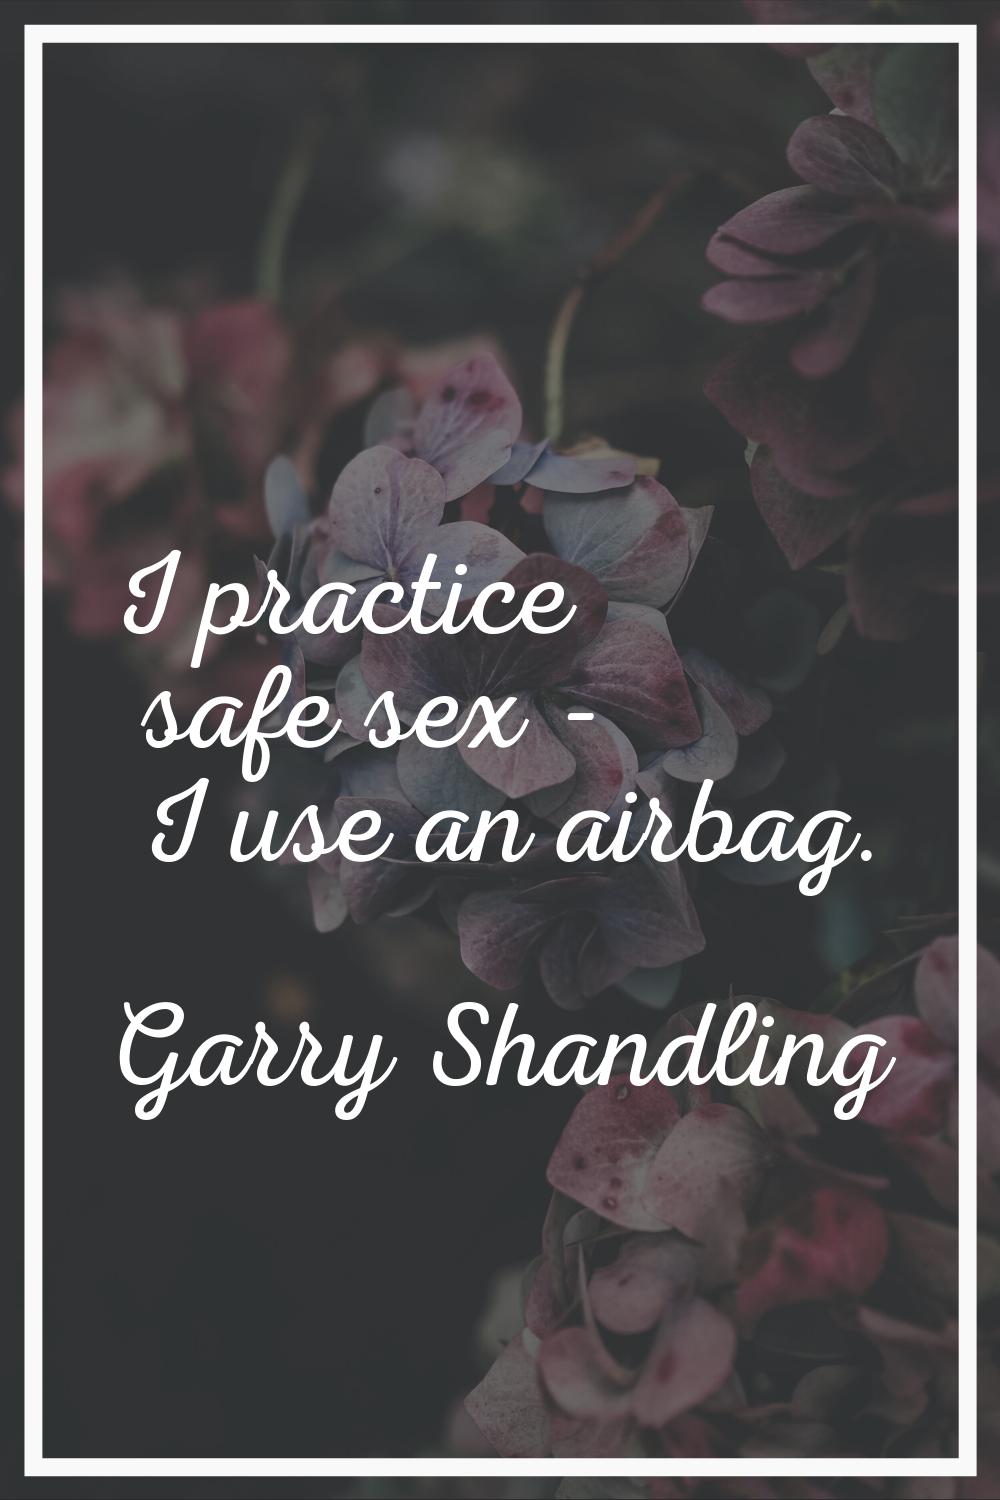 I practice safe sex - I use an airbag.